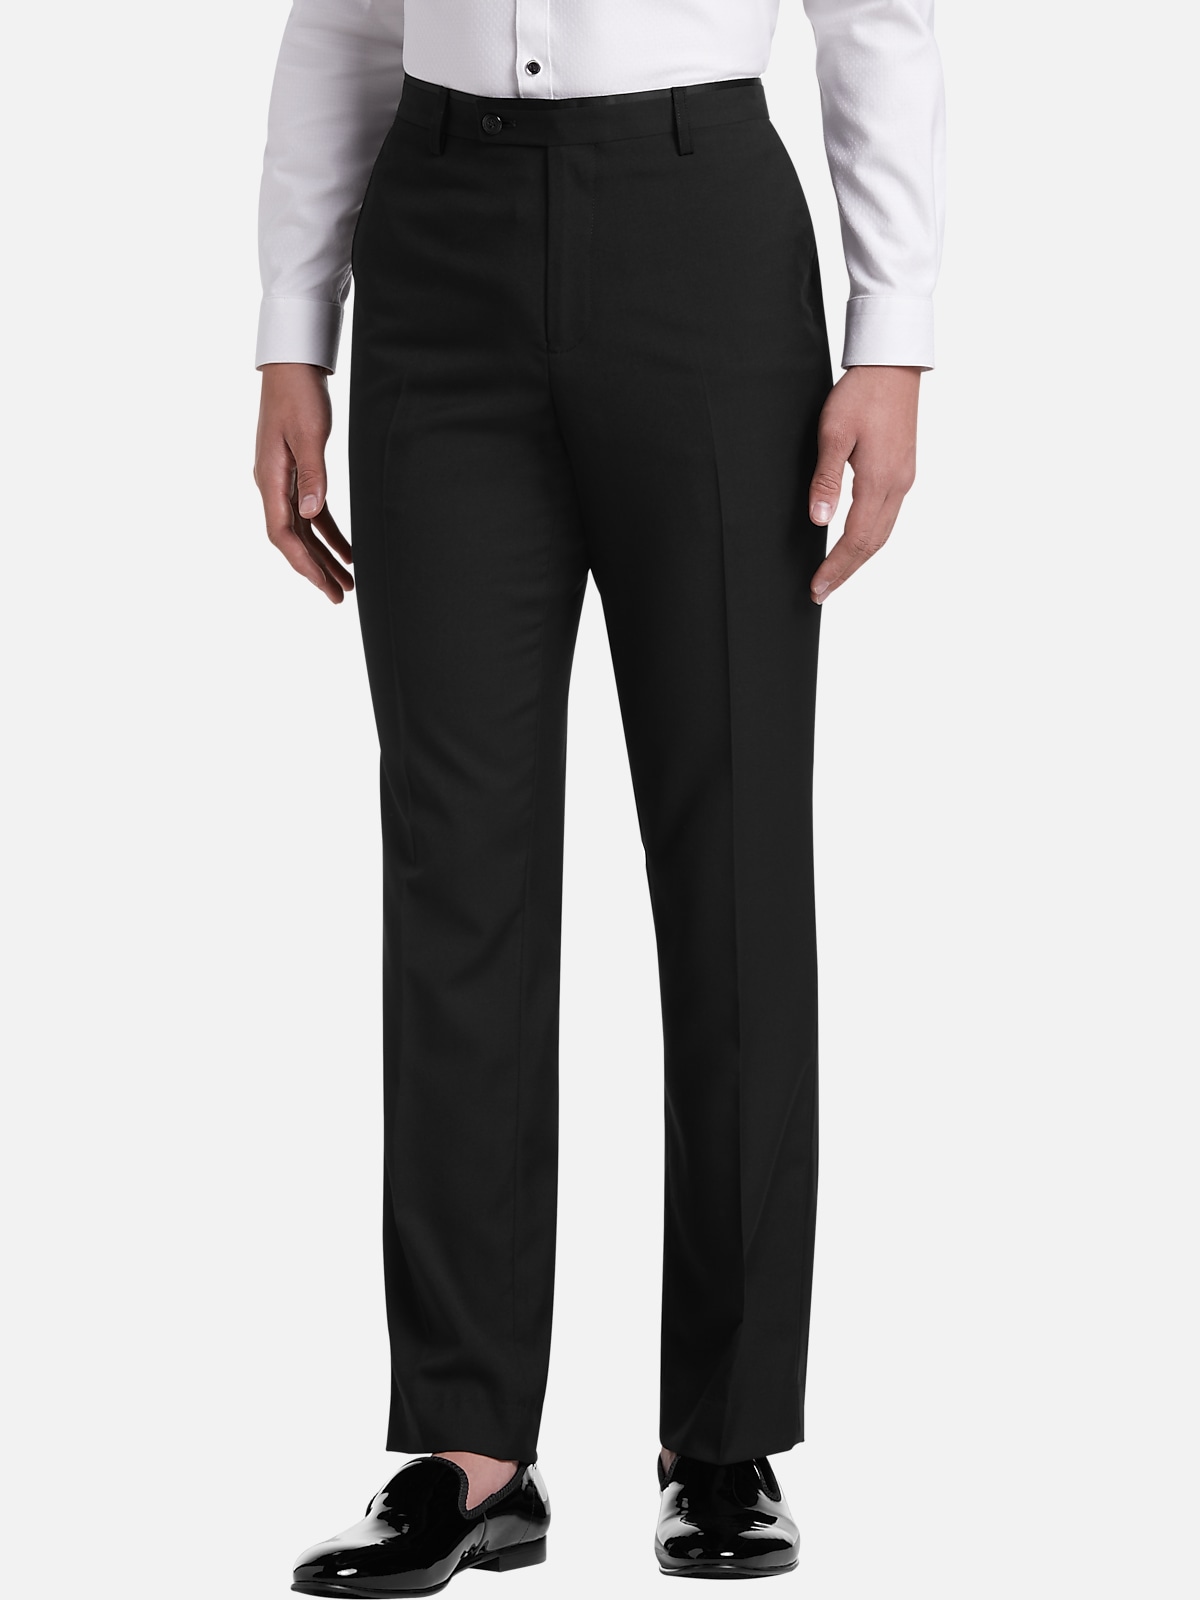 Paisley & Gray Tuxedo Suit Separates Pants | Dinner Jackets & Tuxedos ...